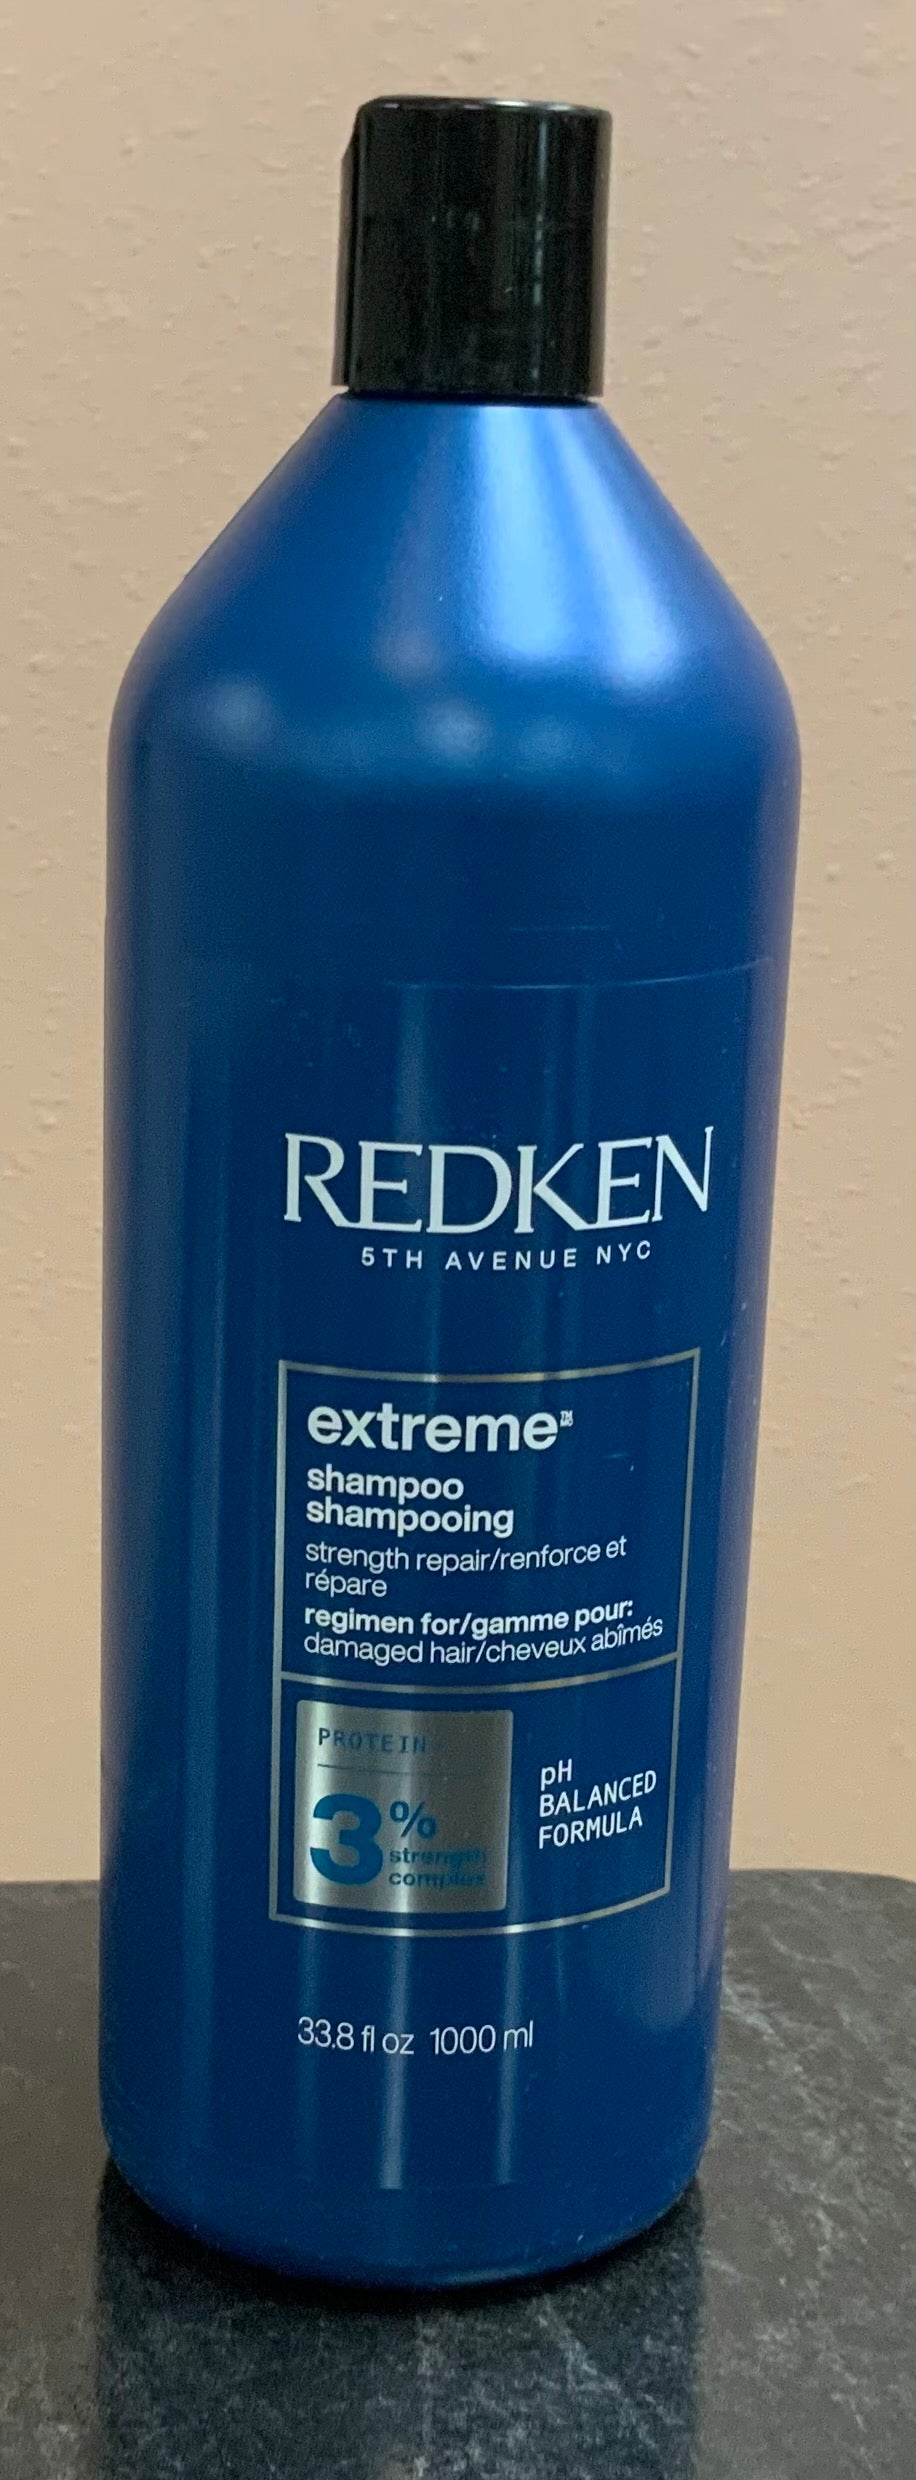 REDKEN extreme shampoo